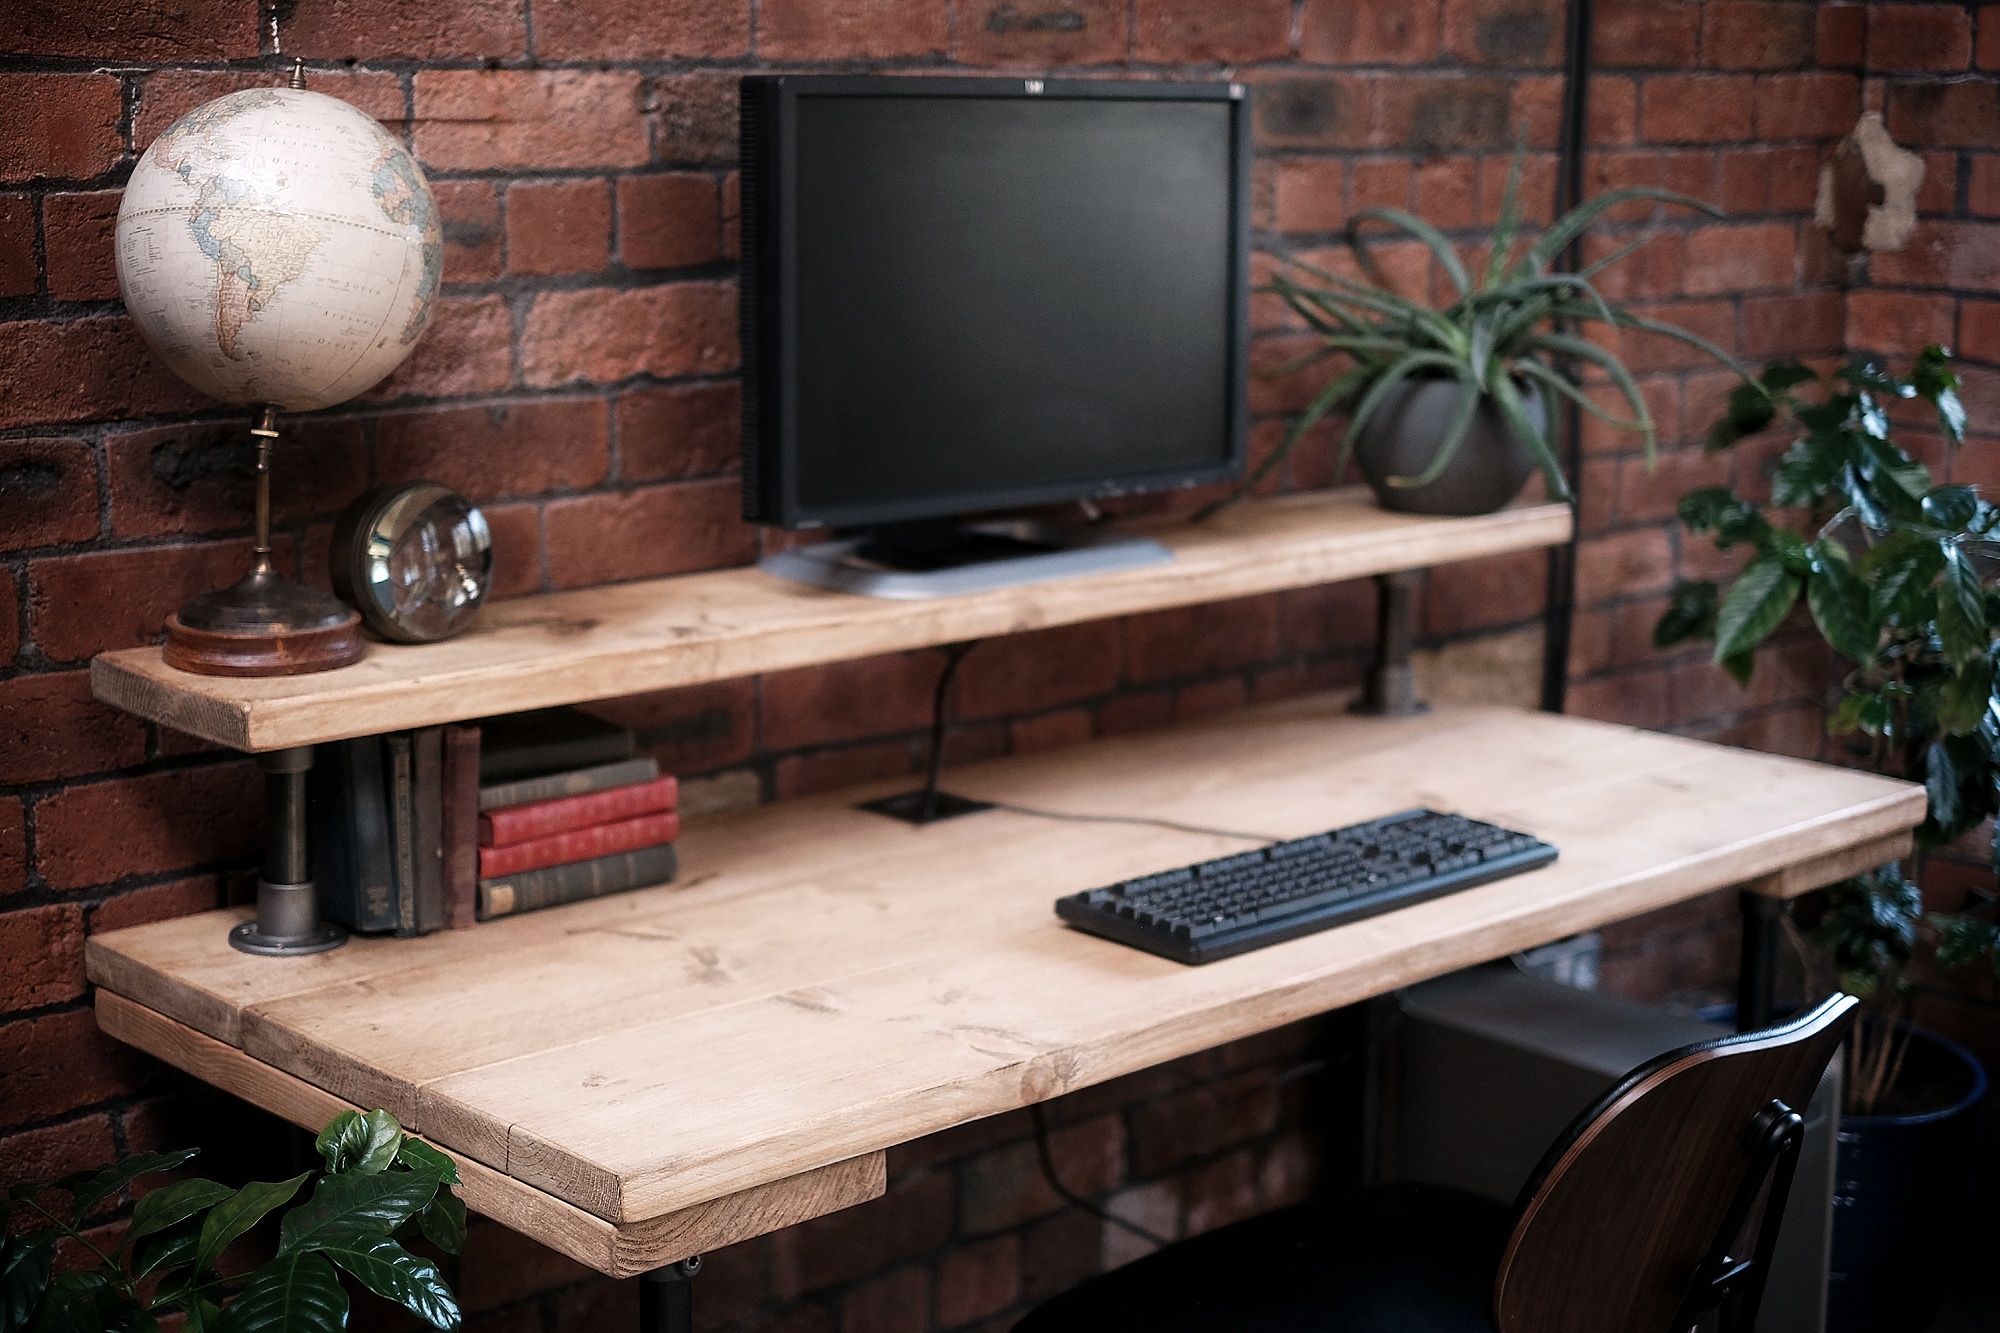 Office Bedroom Desk Made of Scaffold Boards Black Steel -  Sweden